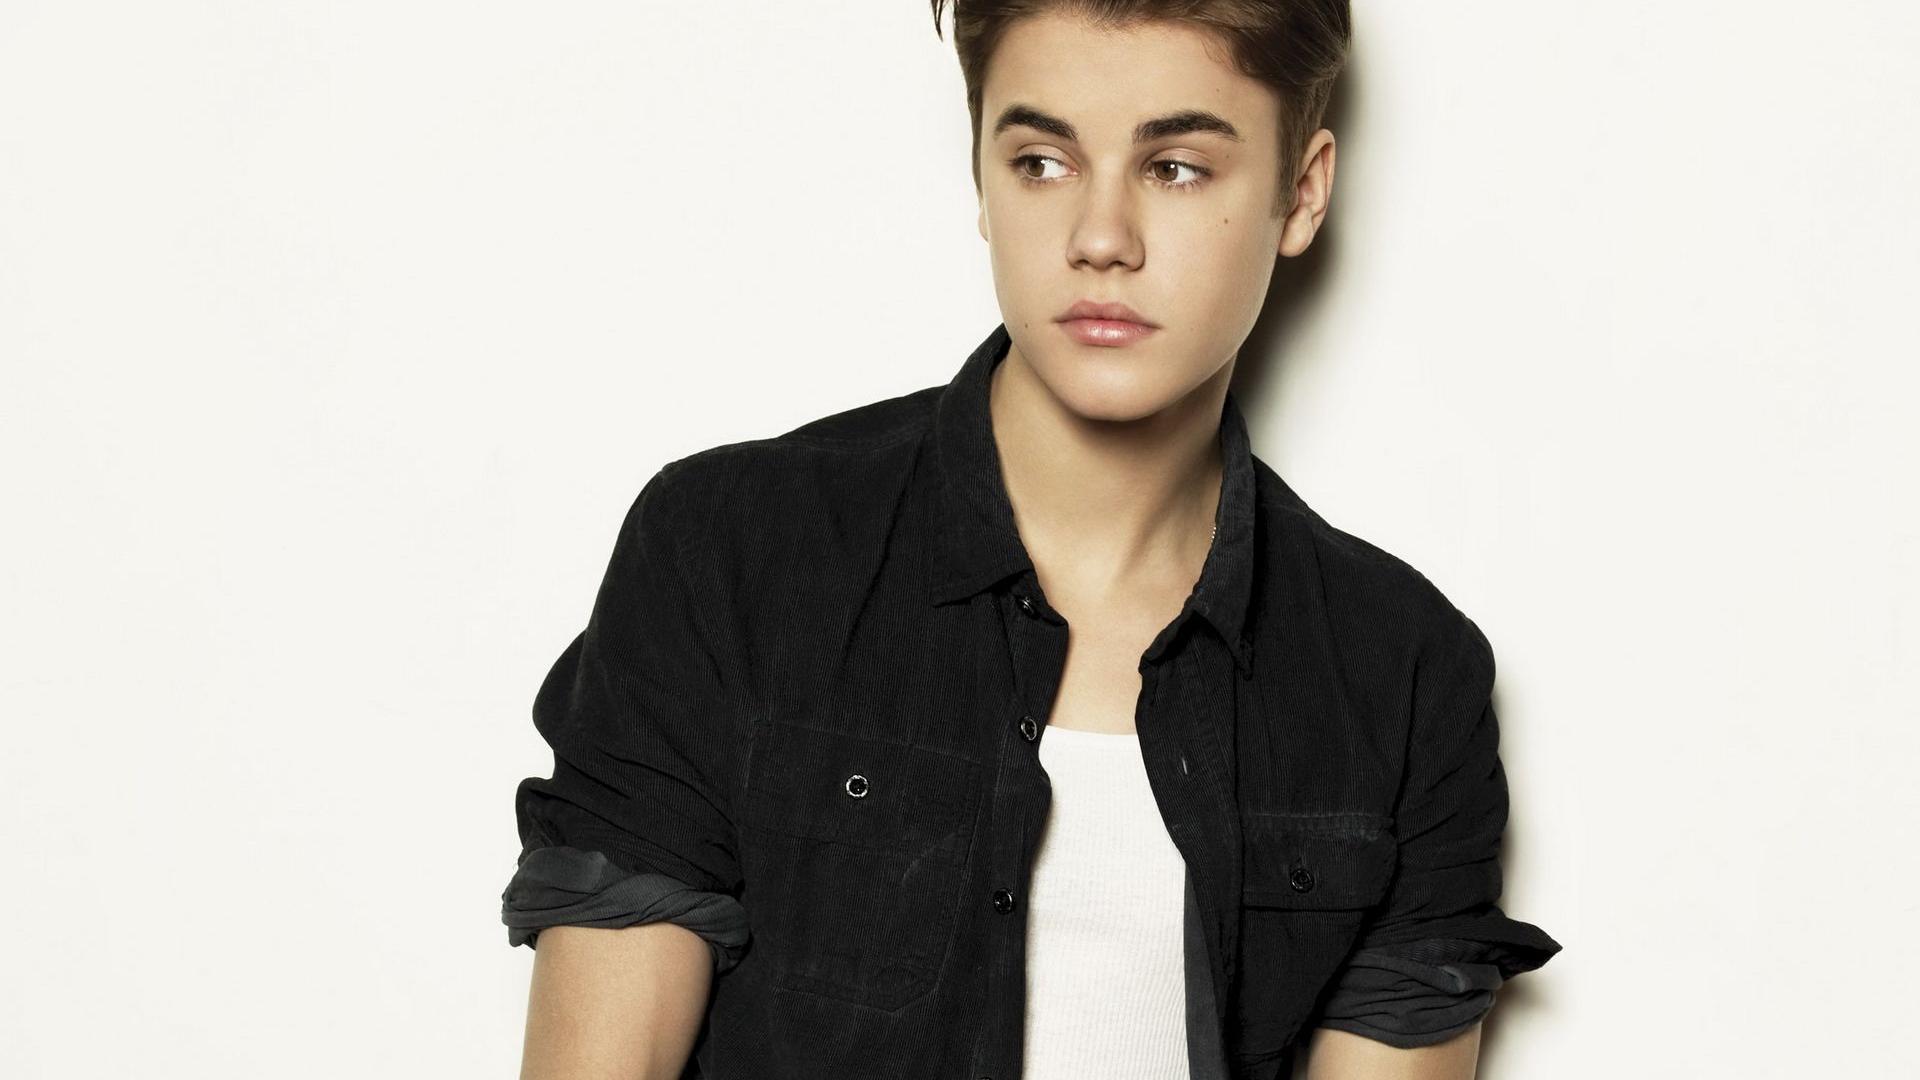 Justin Bieber Wallpaper HD. Wallpaper, Background, Image, Art